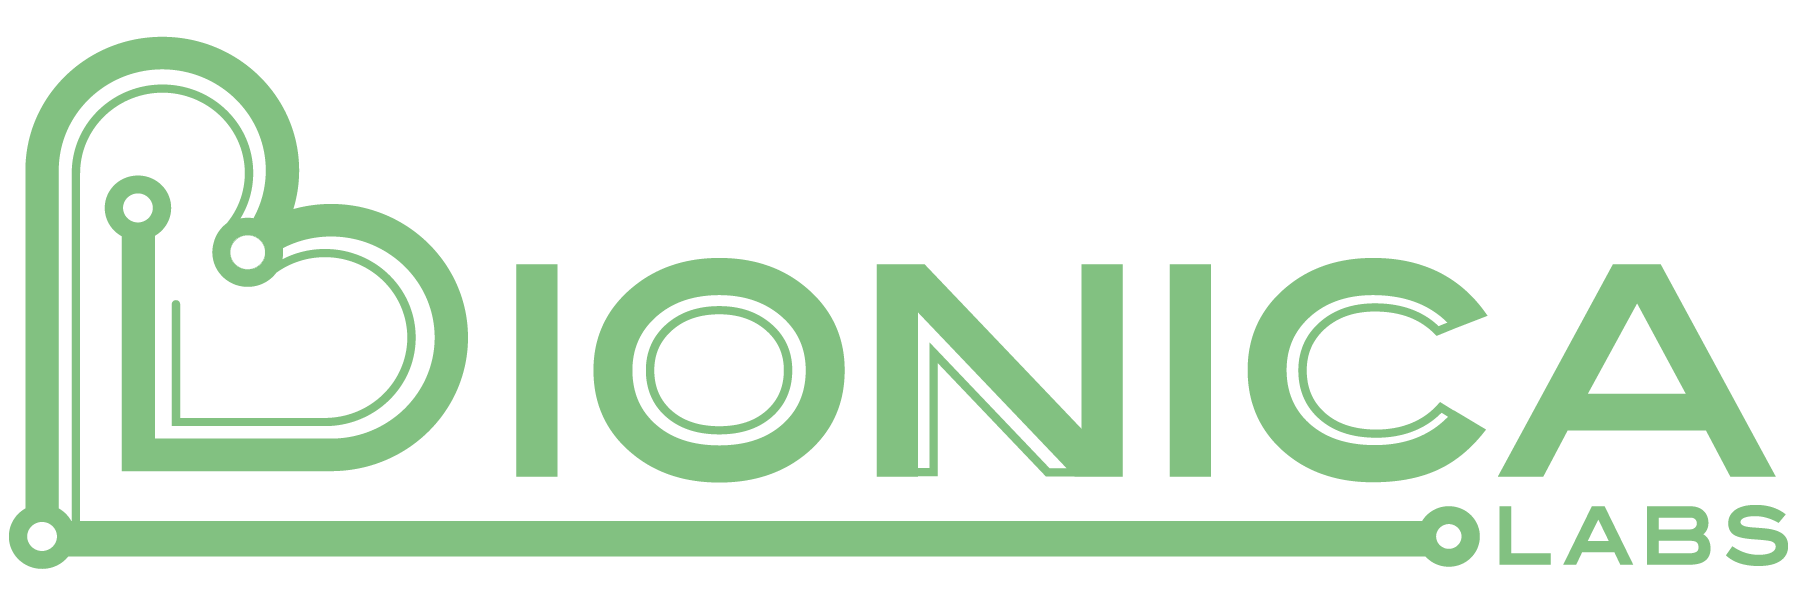 Bionica Labs